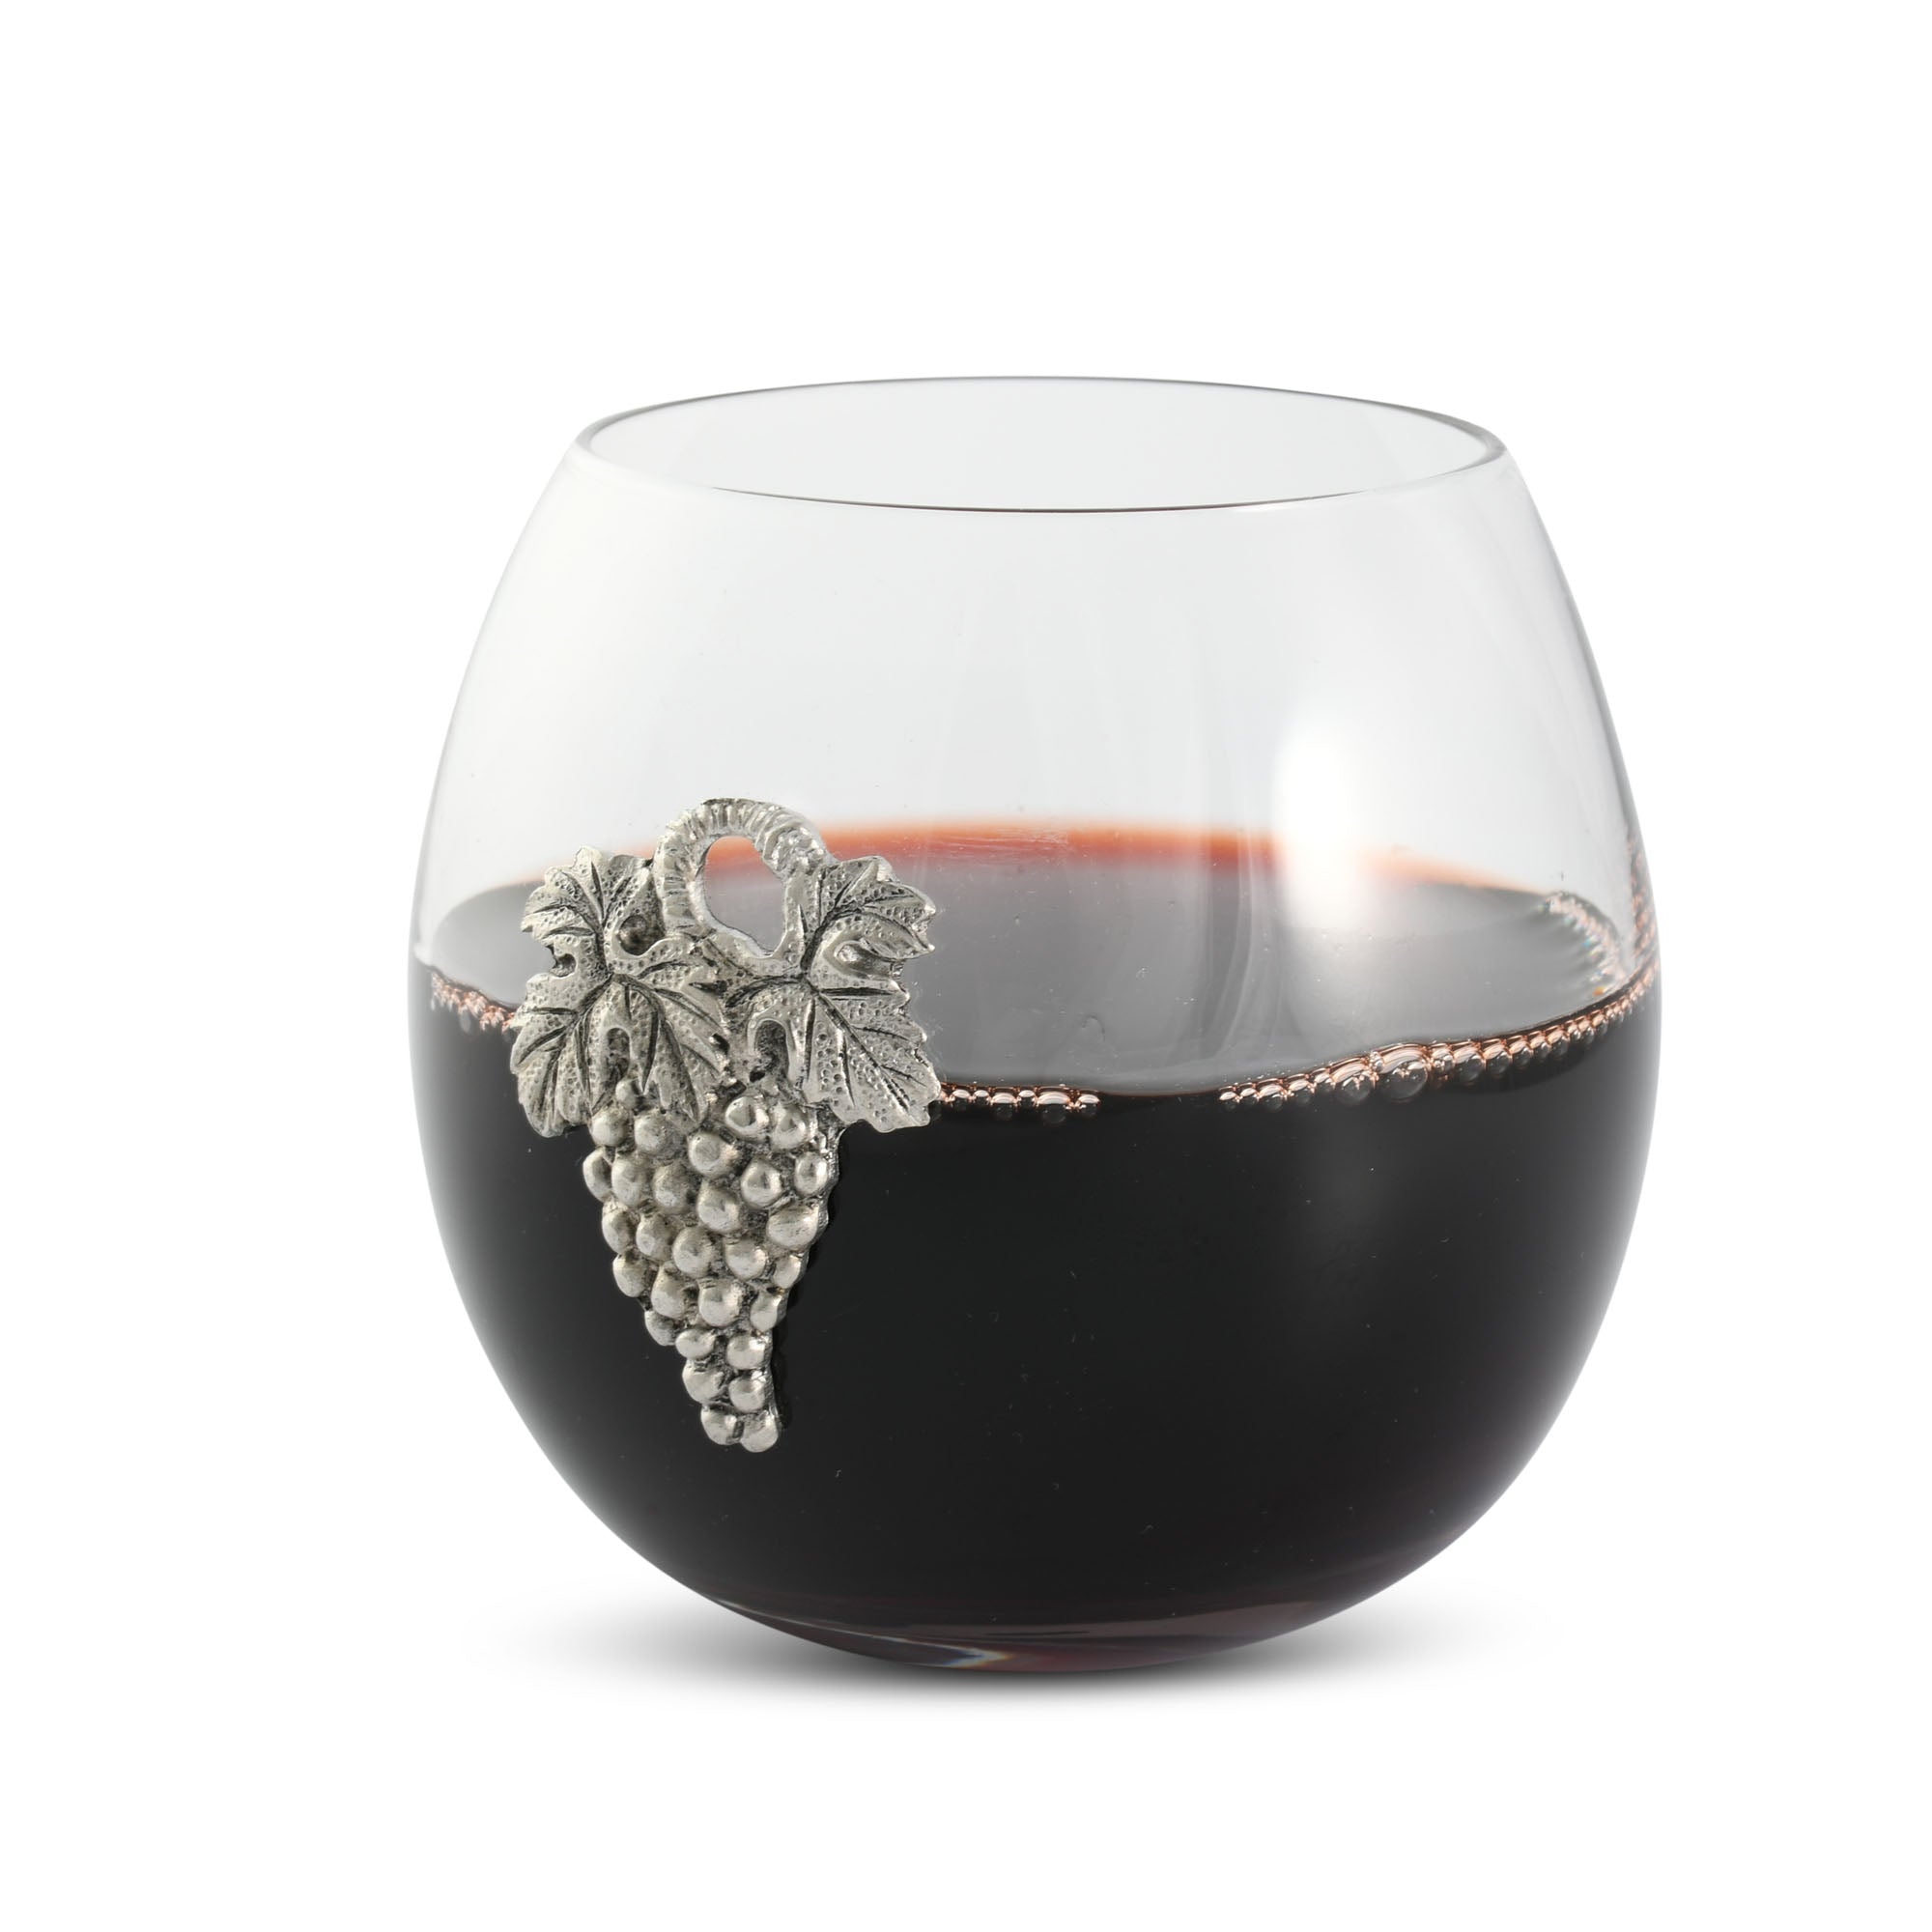 Vagabond House Grape Stemless Wine Glass Product Image